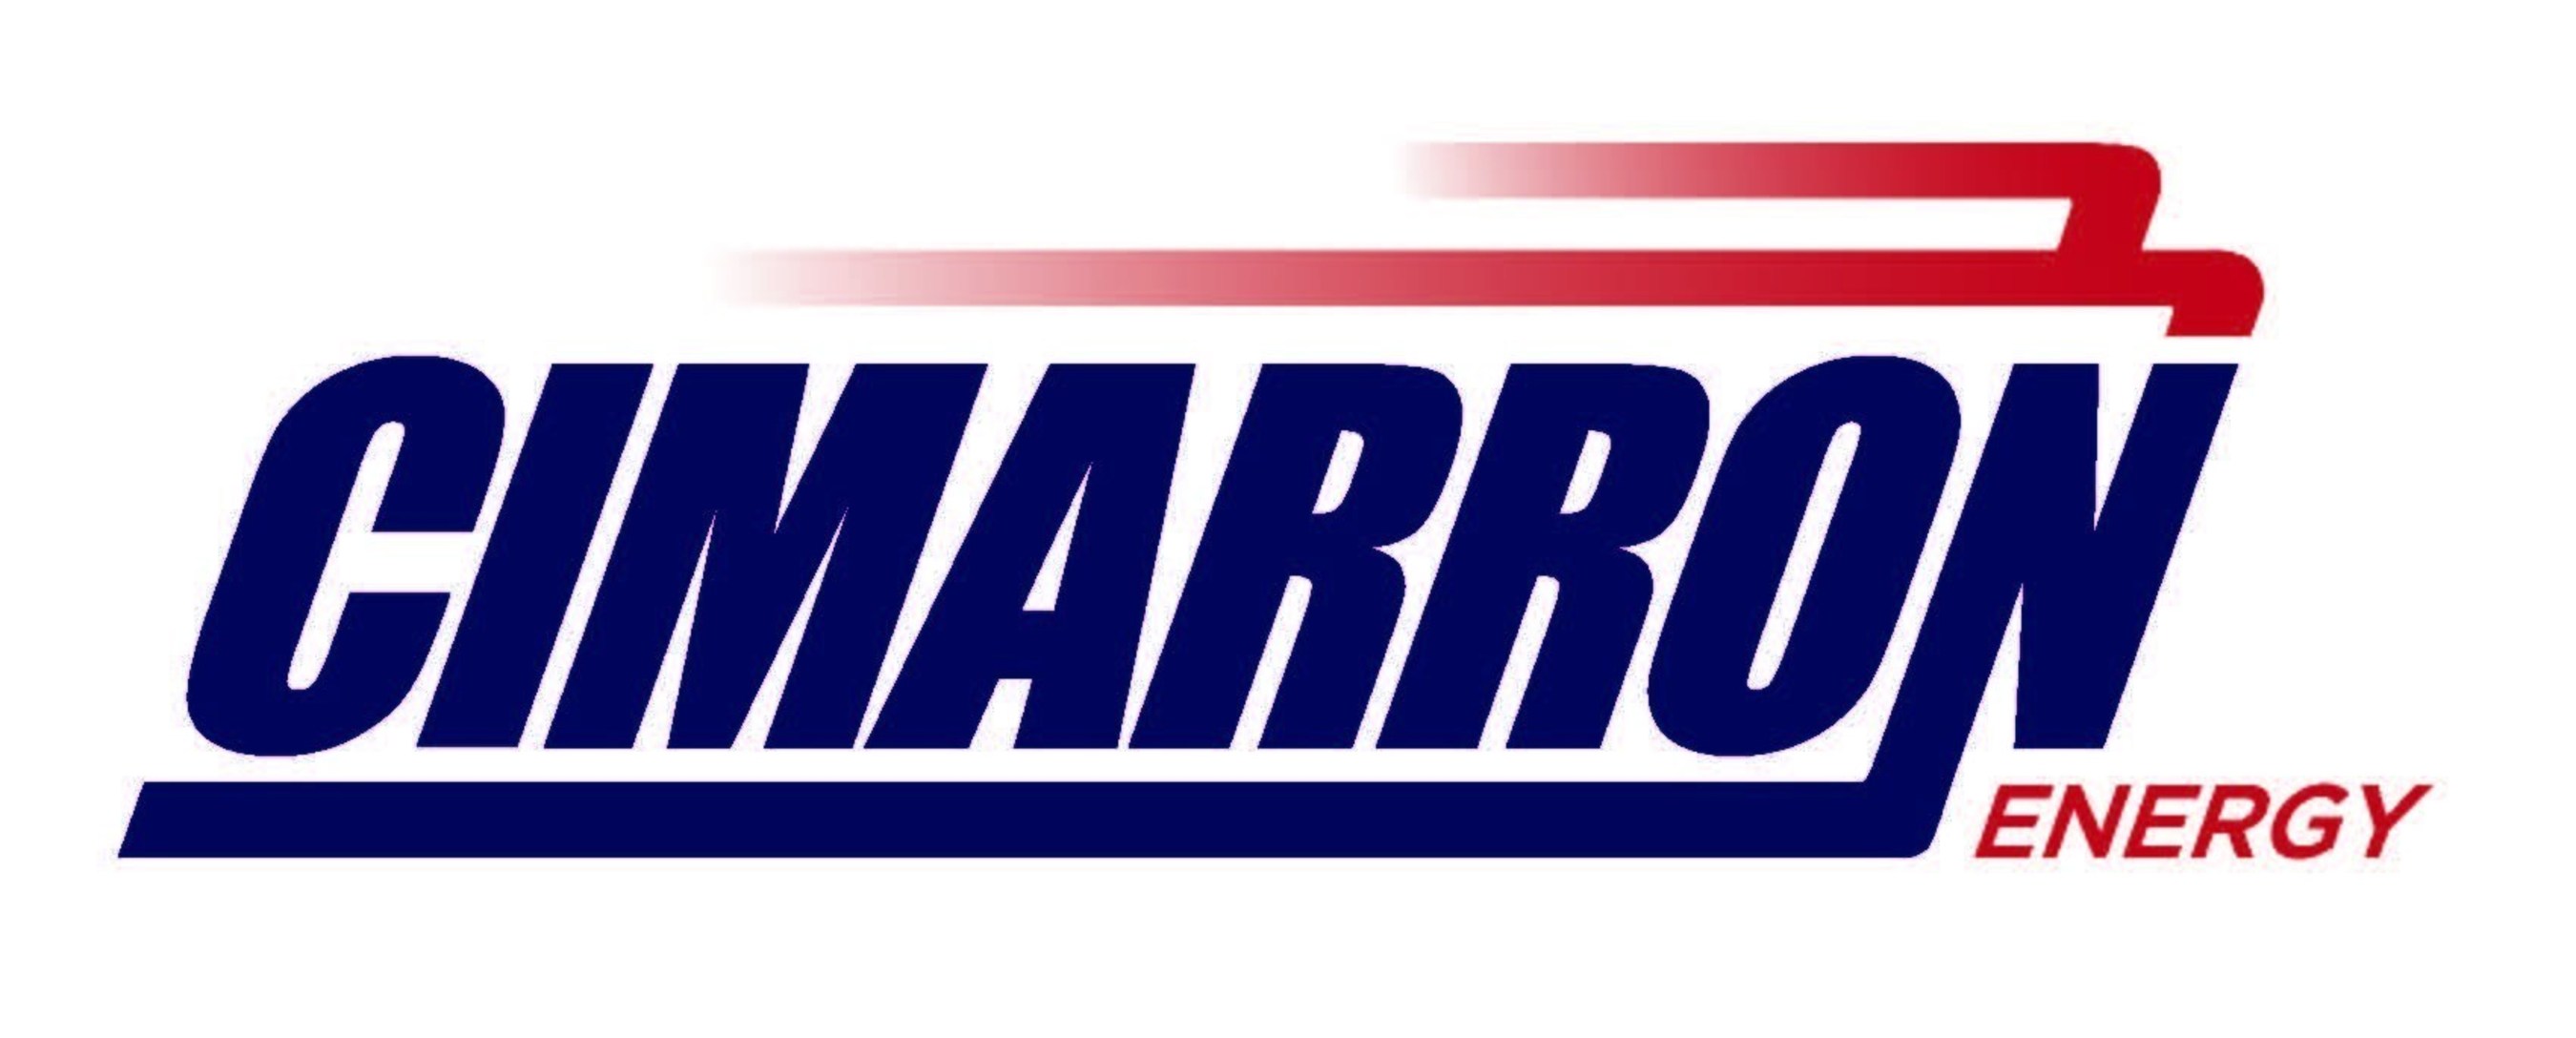 Cimarron Logo